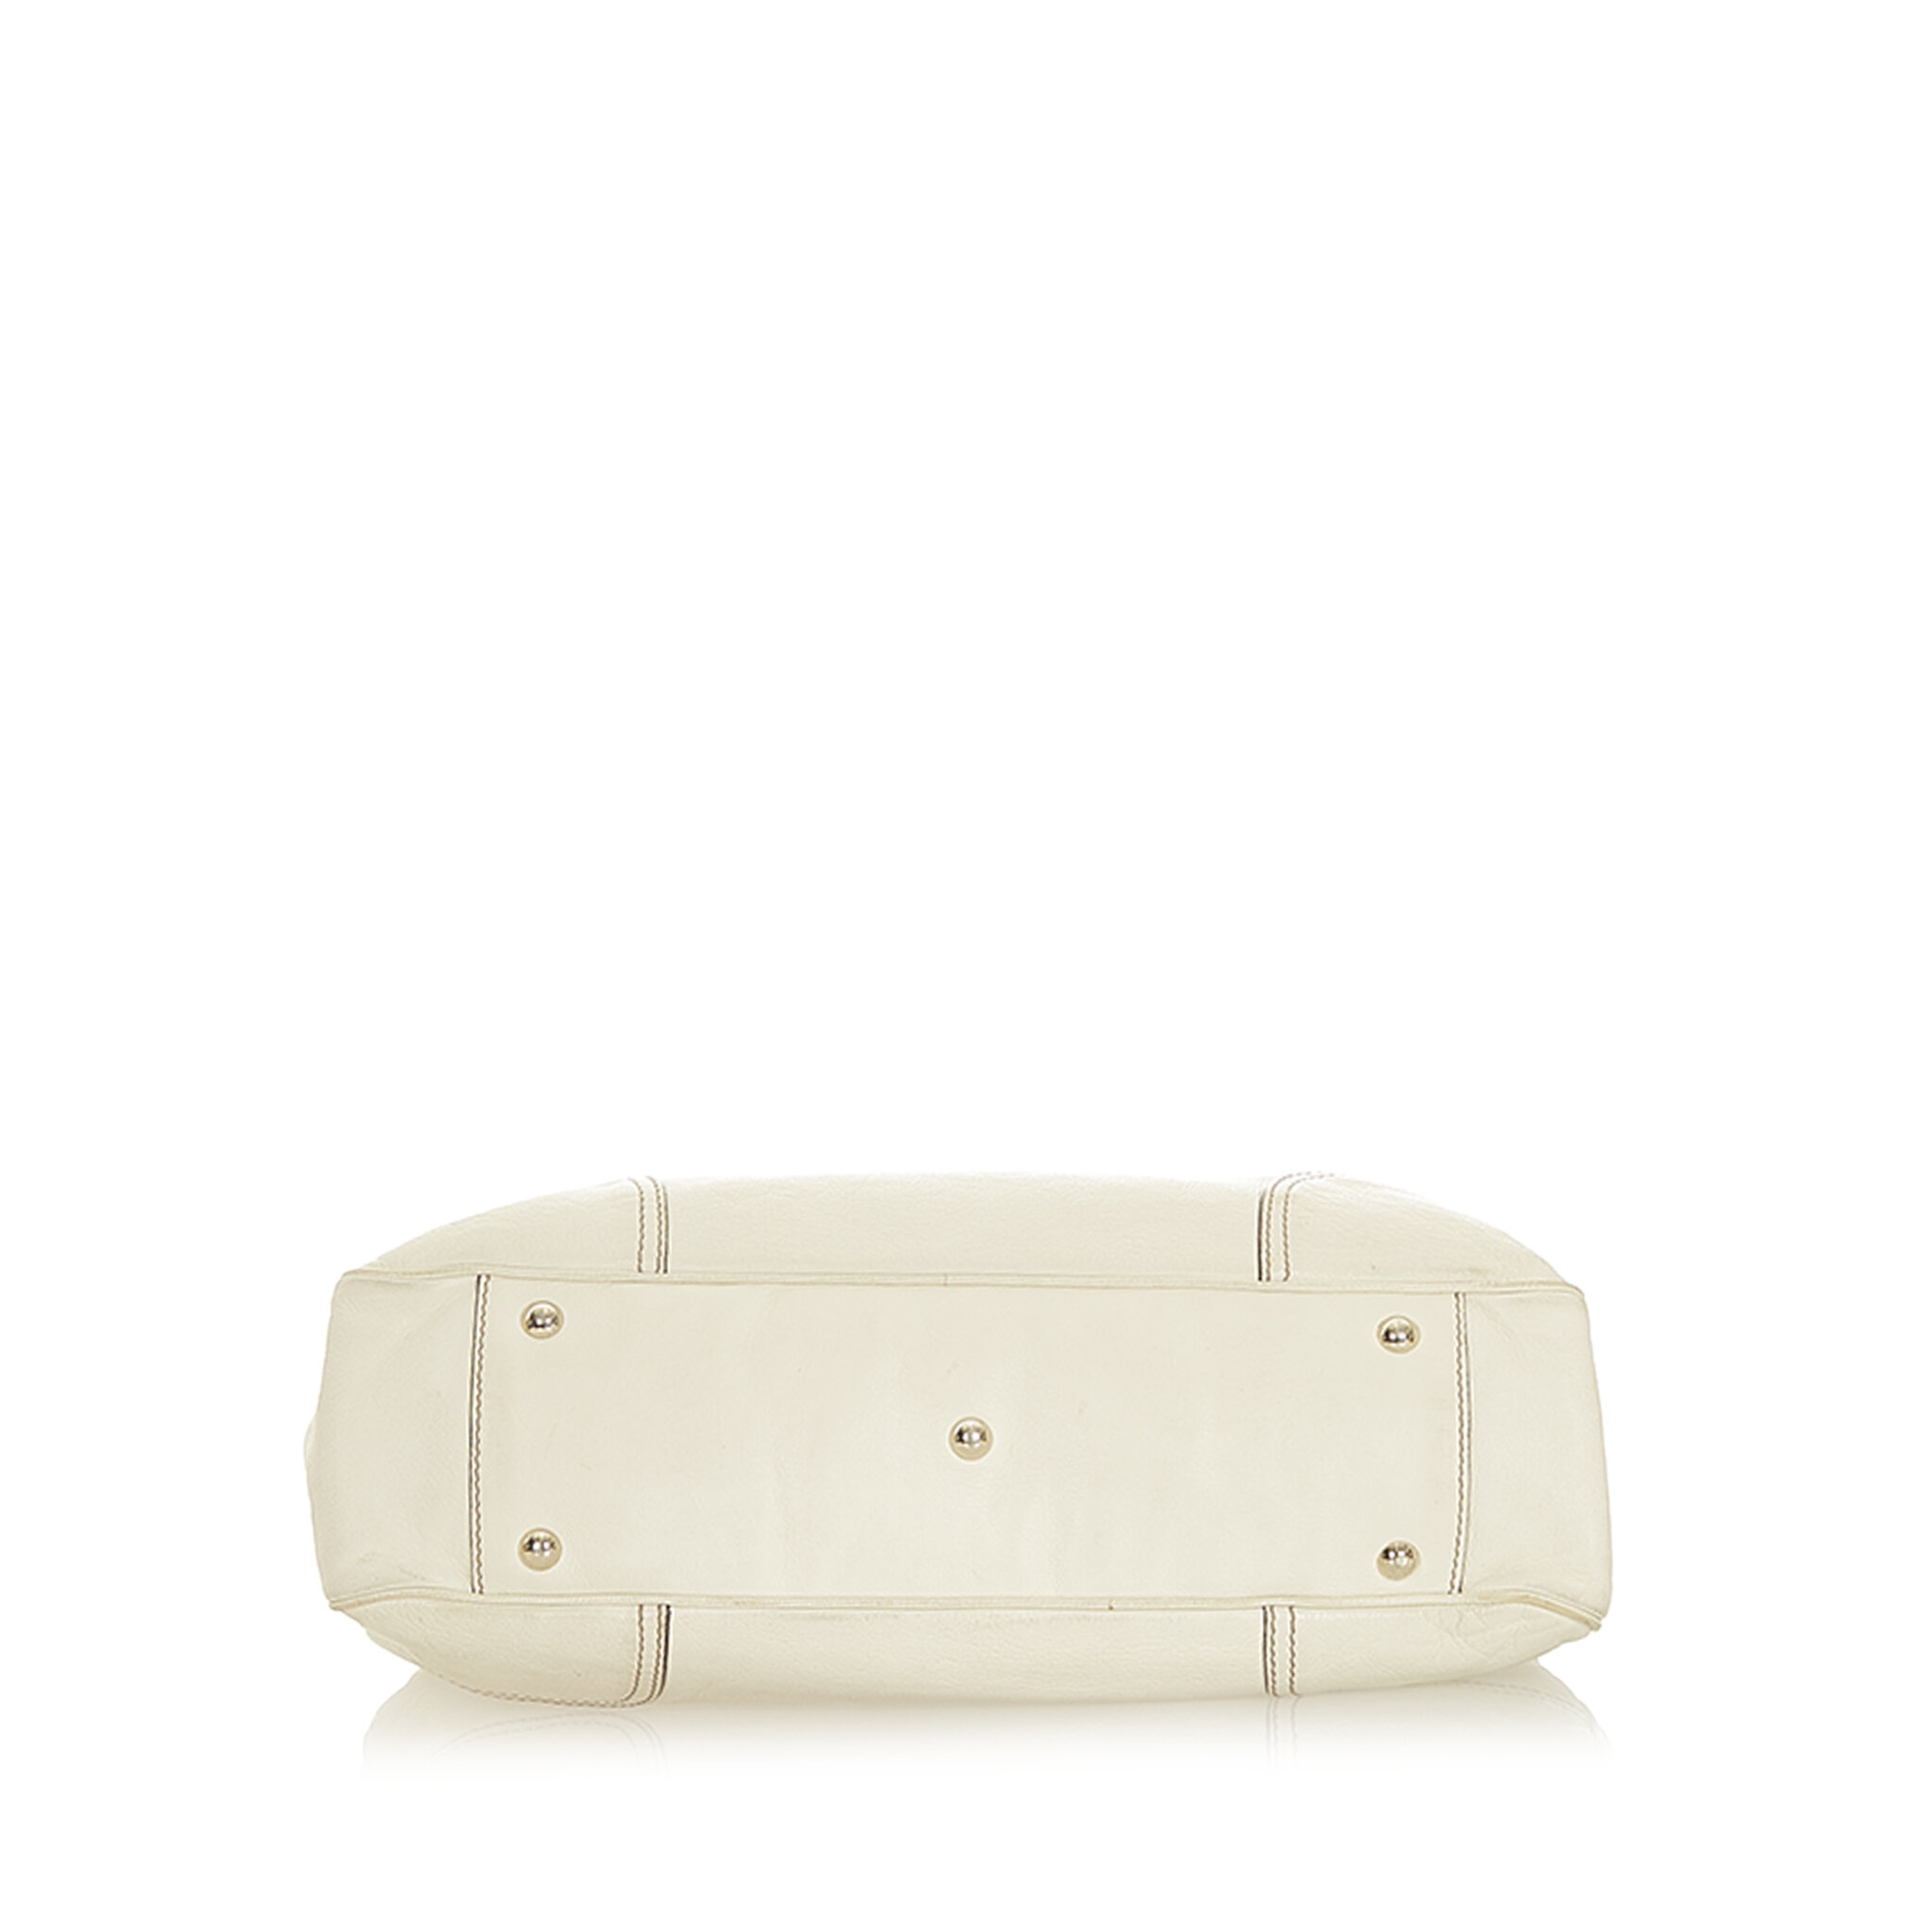 Gucci Princy Leather Tote Bag, white